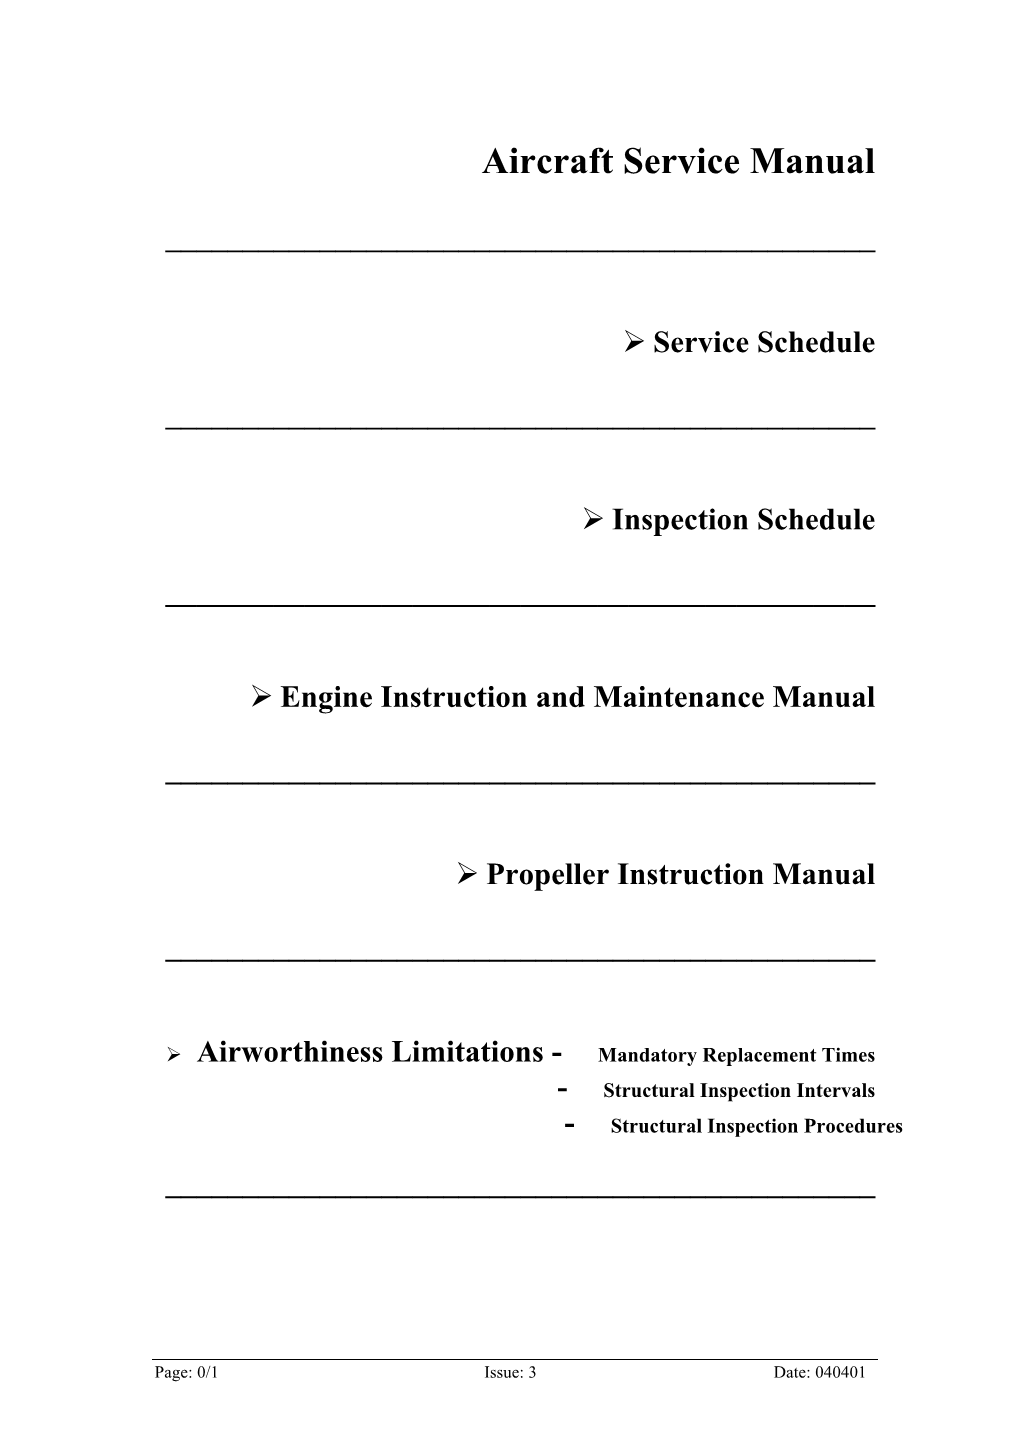 Aircraft Service Manual